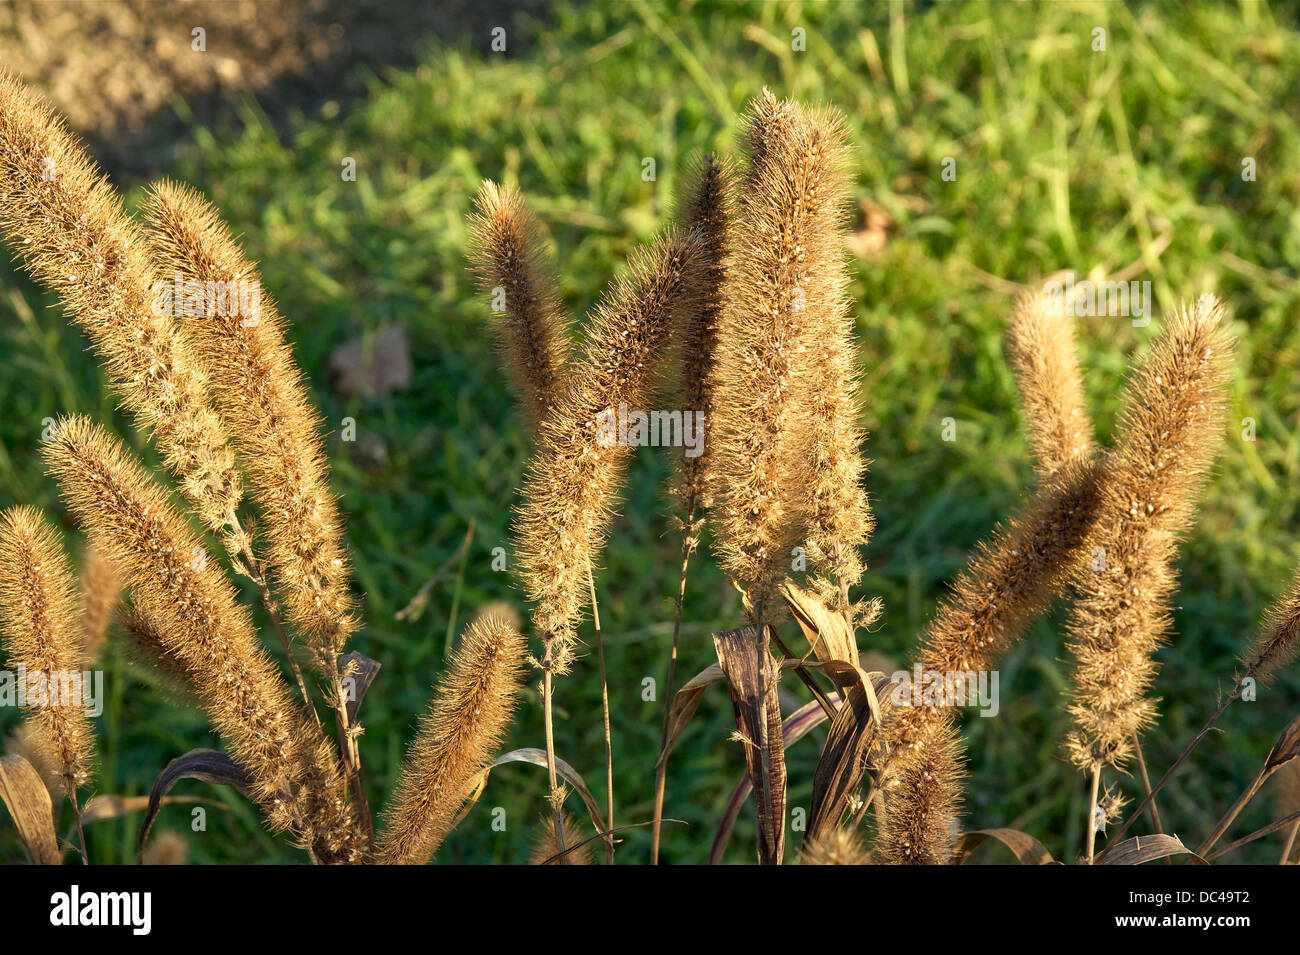 El mijo de Foxtail, Setaria italica (L.) Beauv. en otoño. Foto de stock